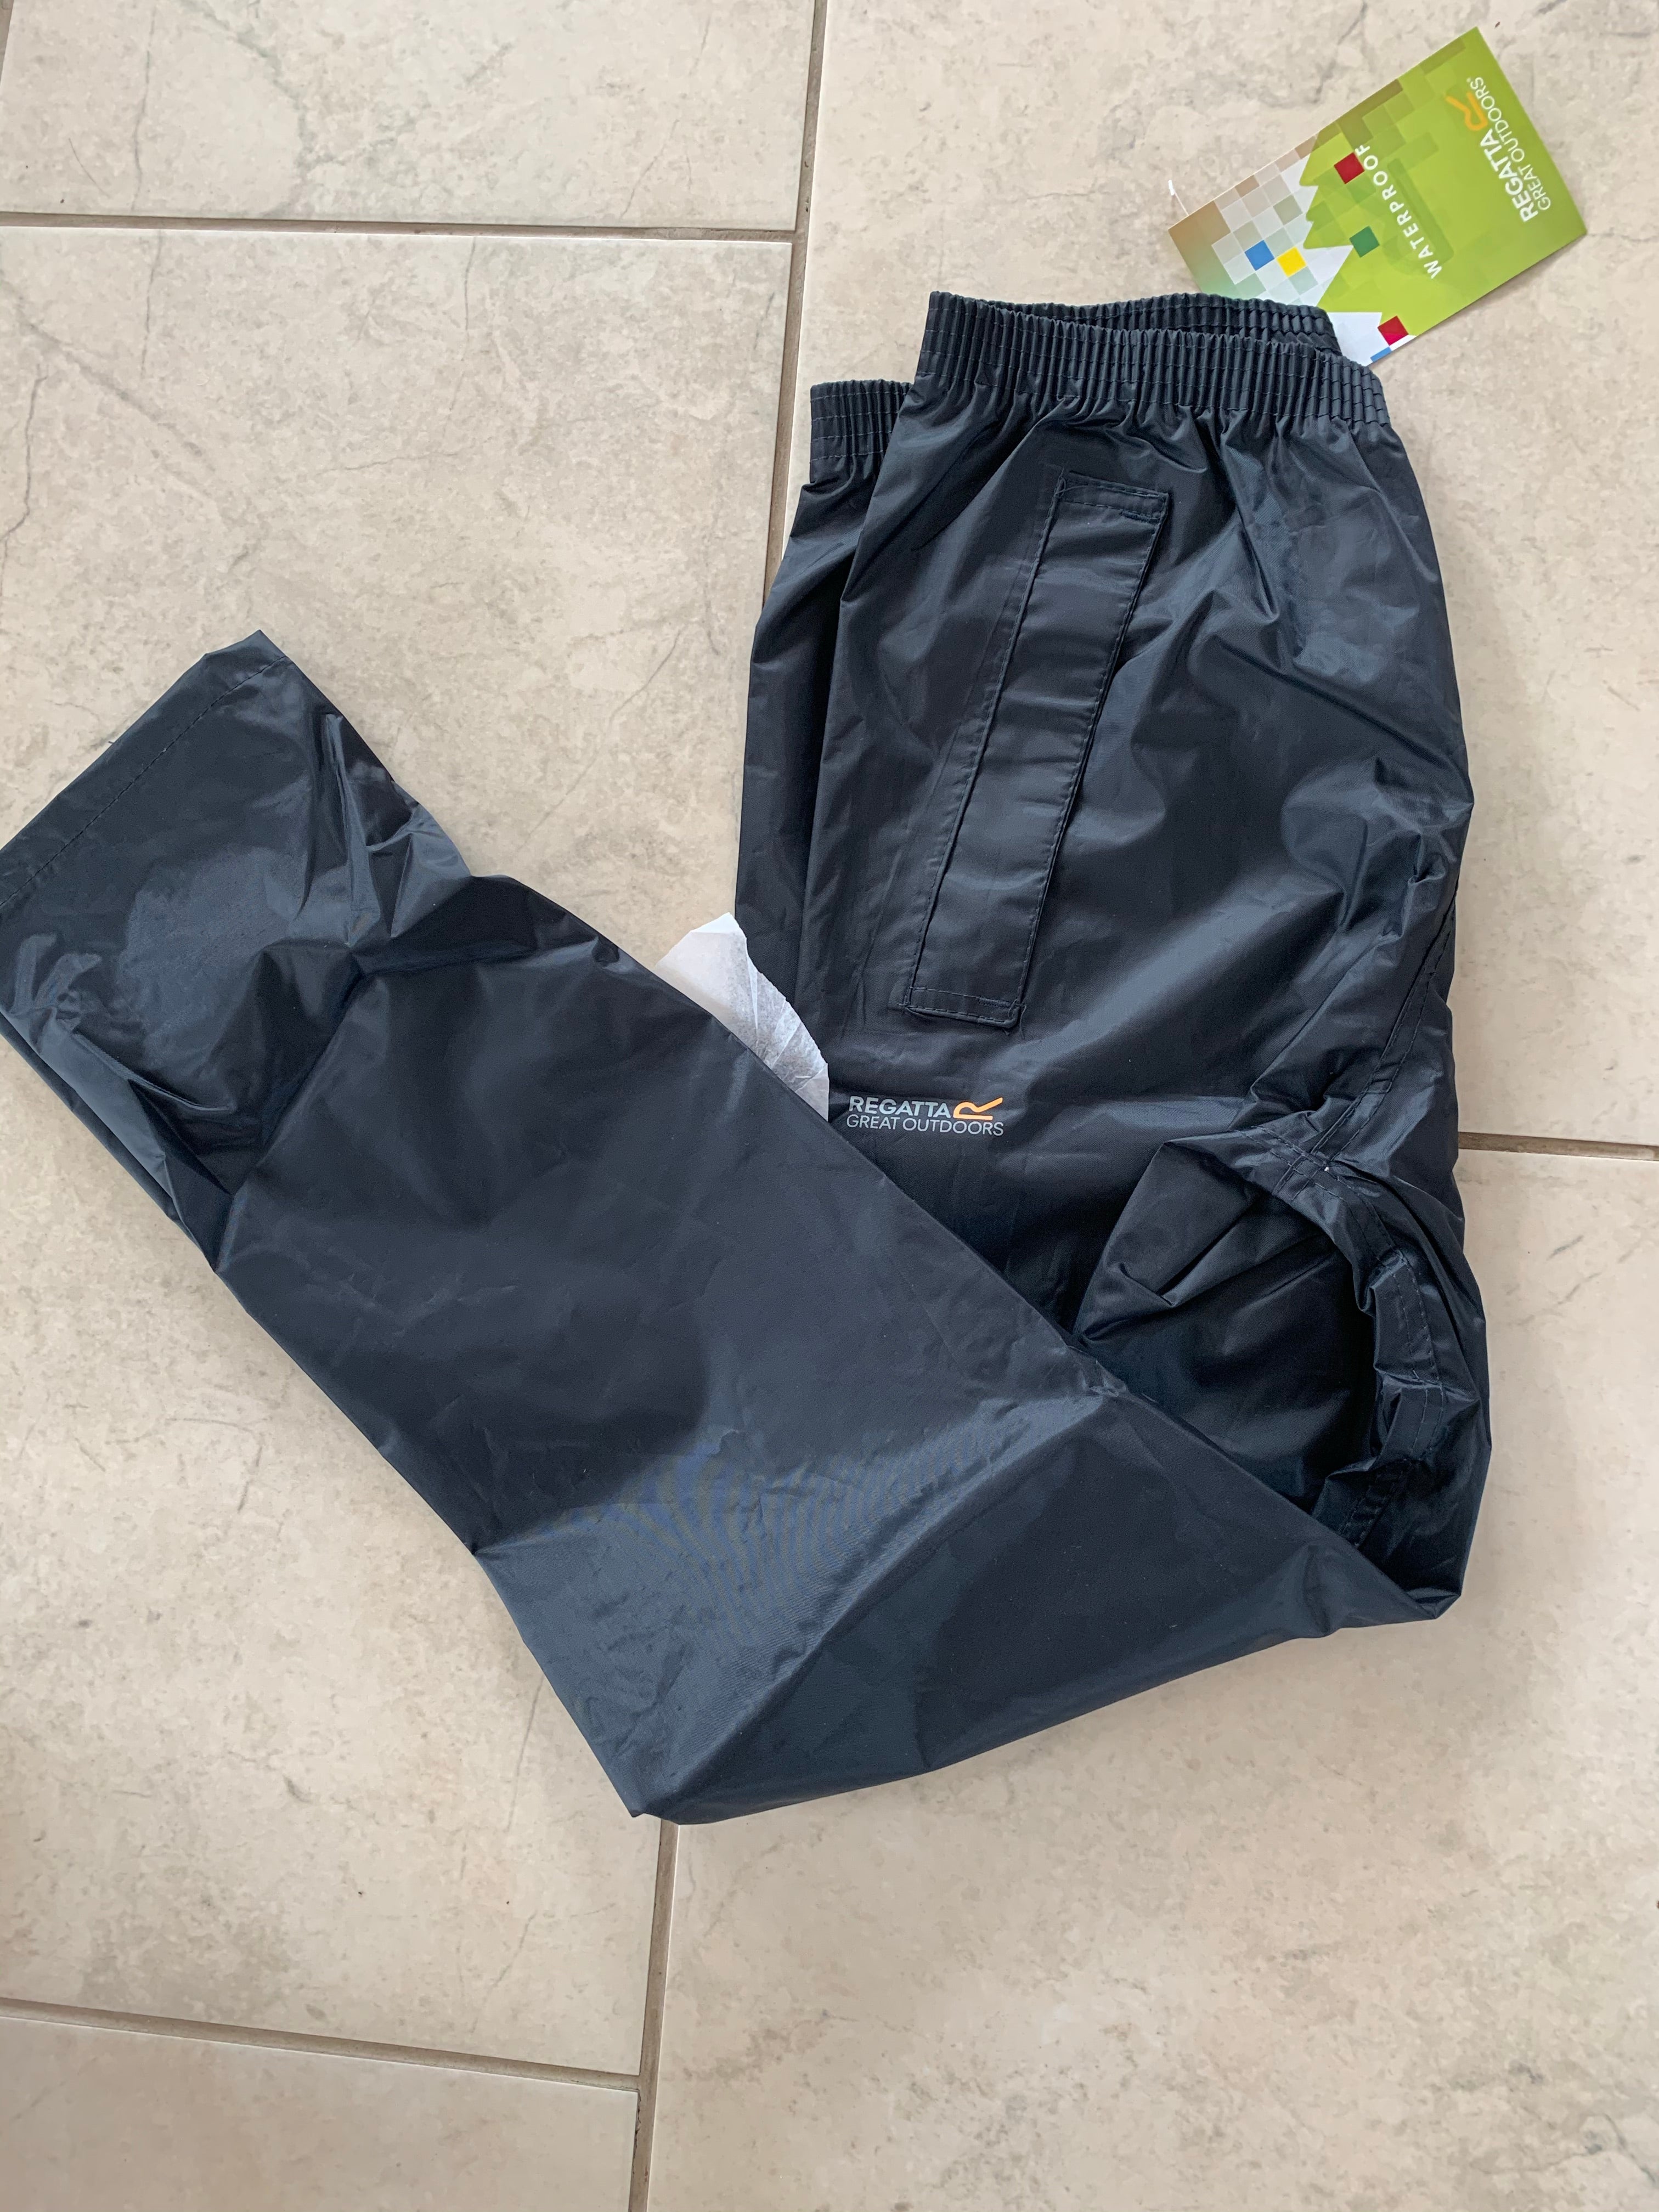 Regatta Waterproof Over Trousers - New - 9/10yrs